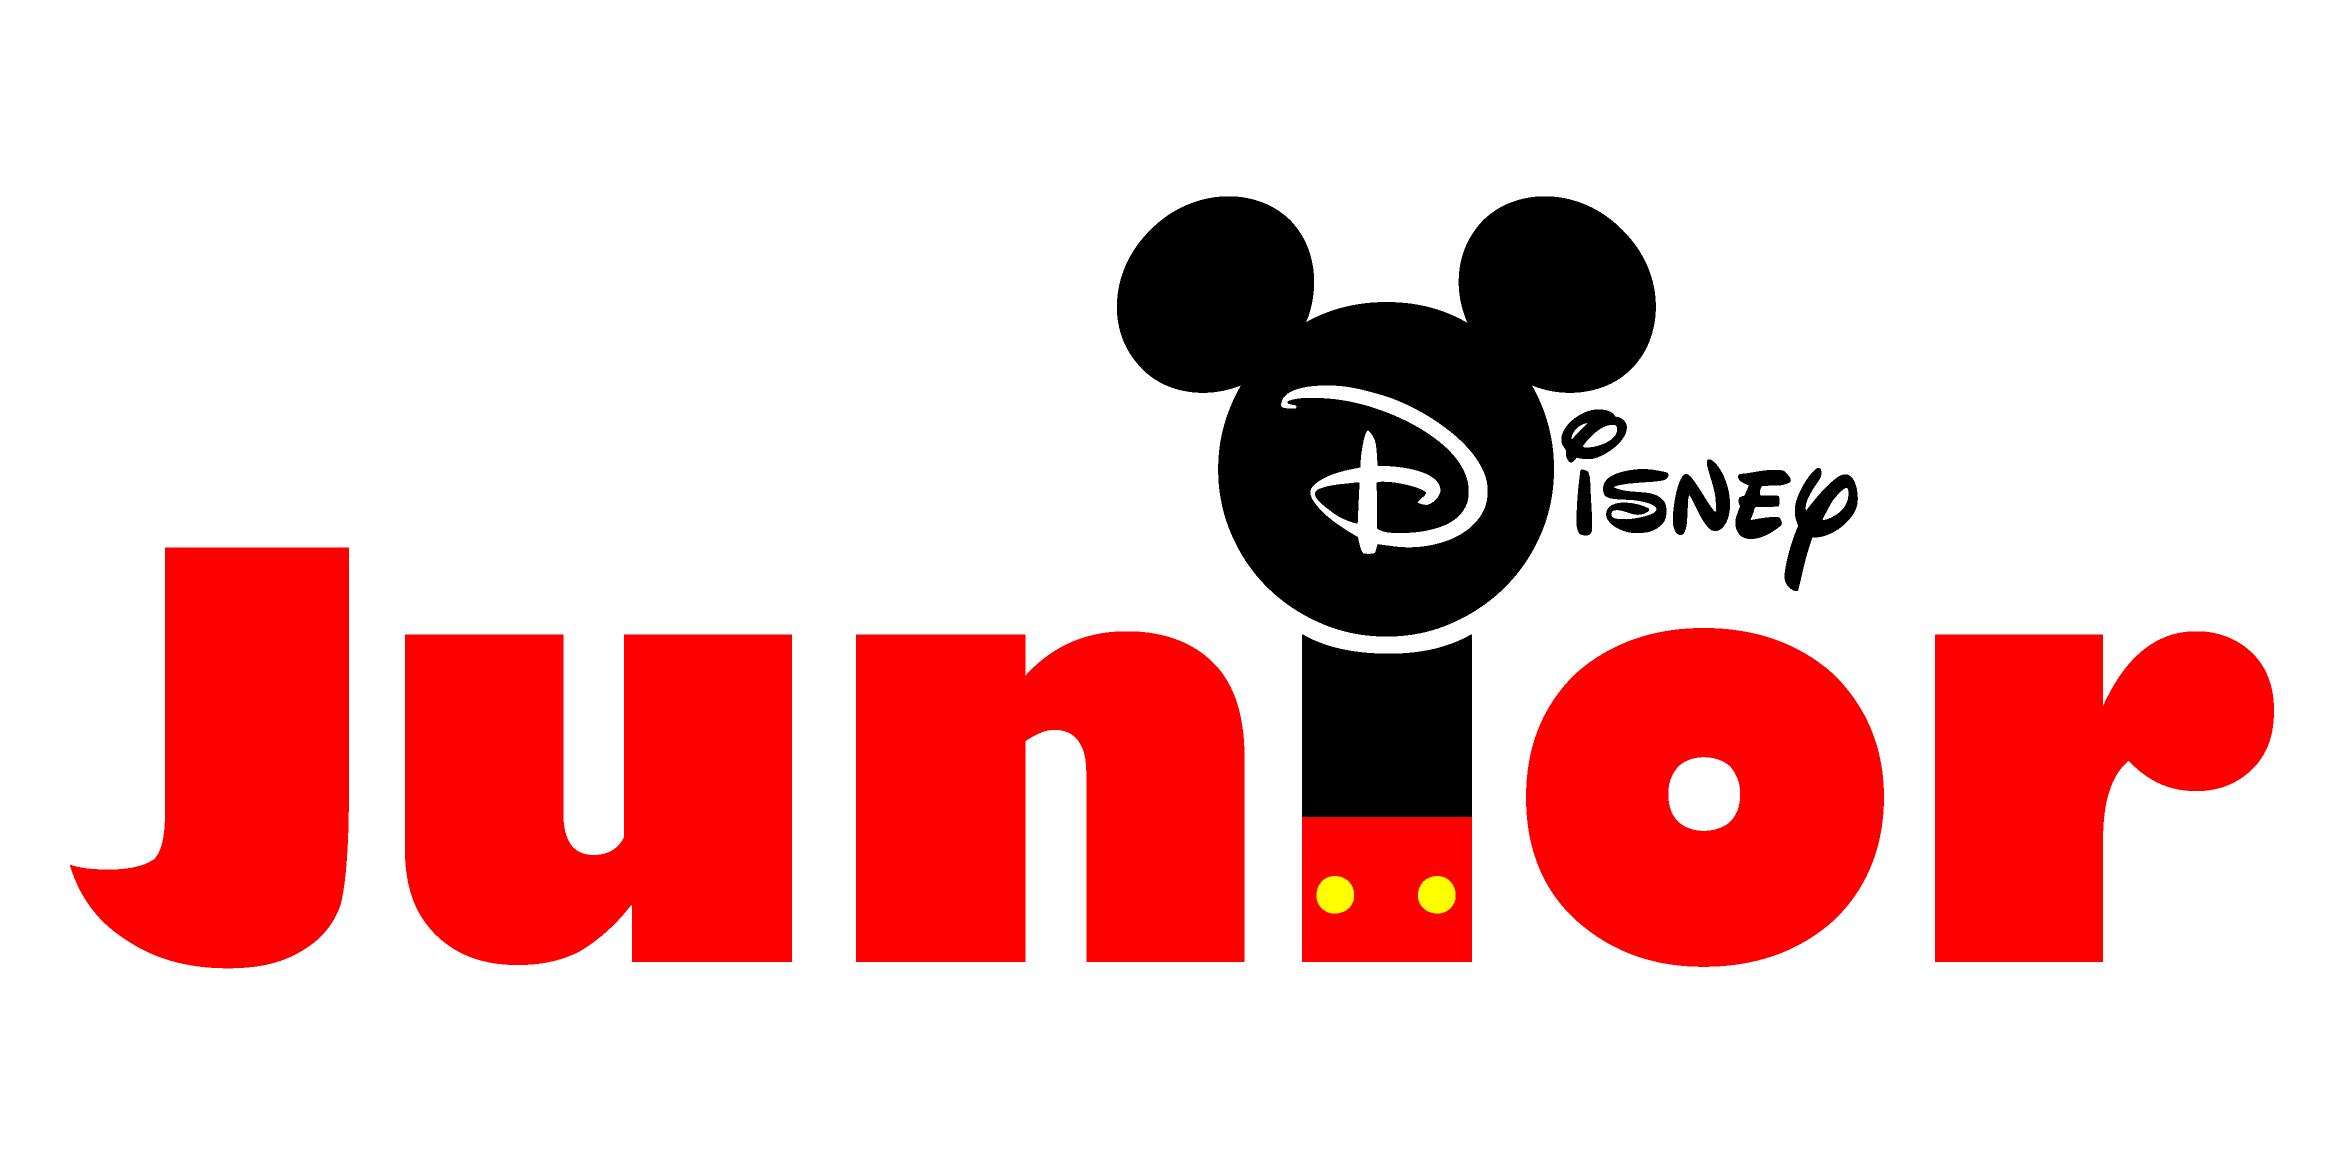 Disney Logo 1349 Hd Wallpapers in Logos